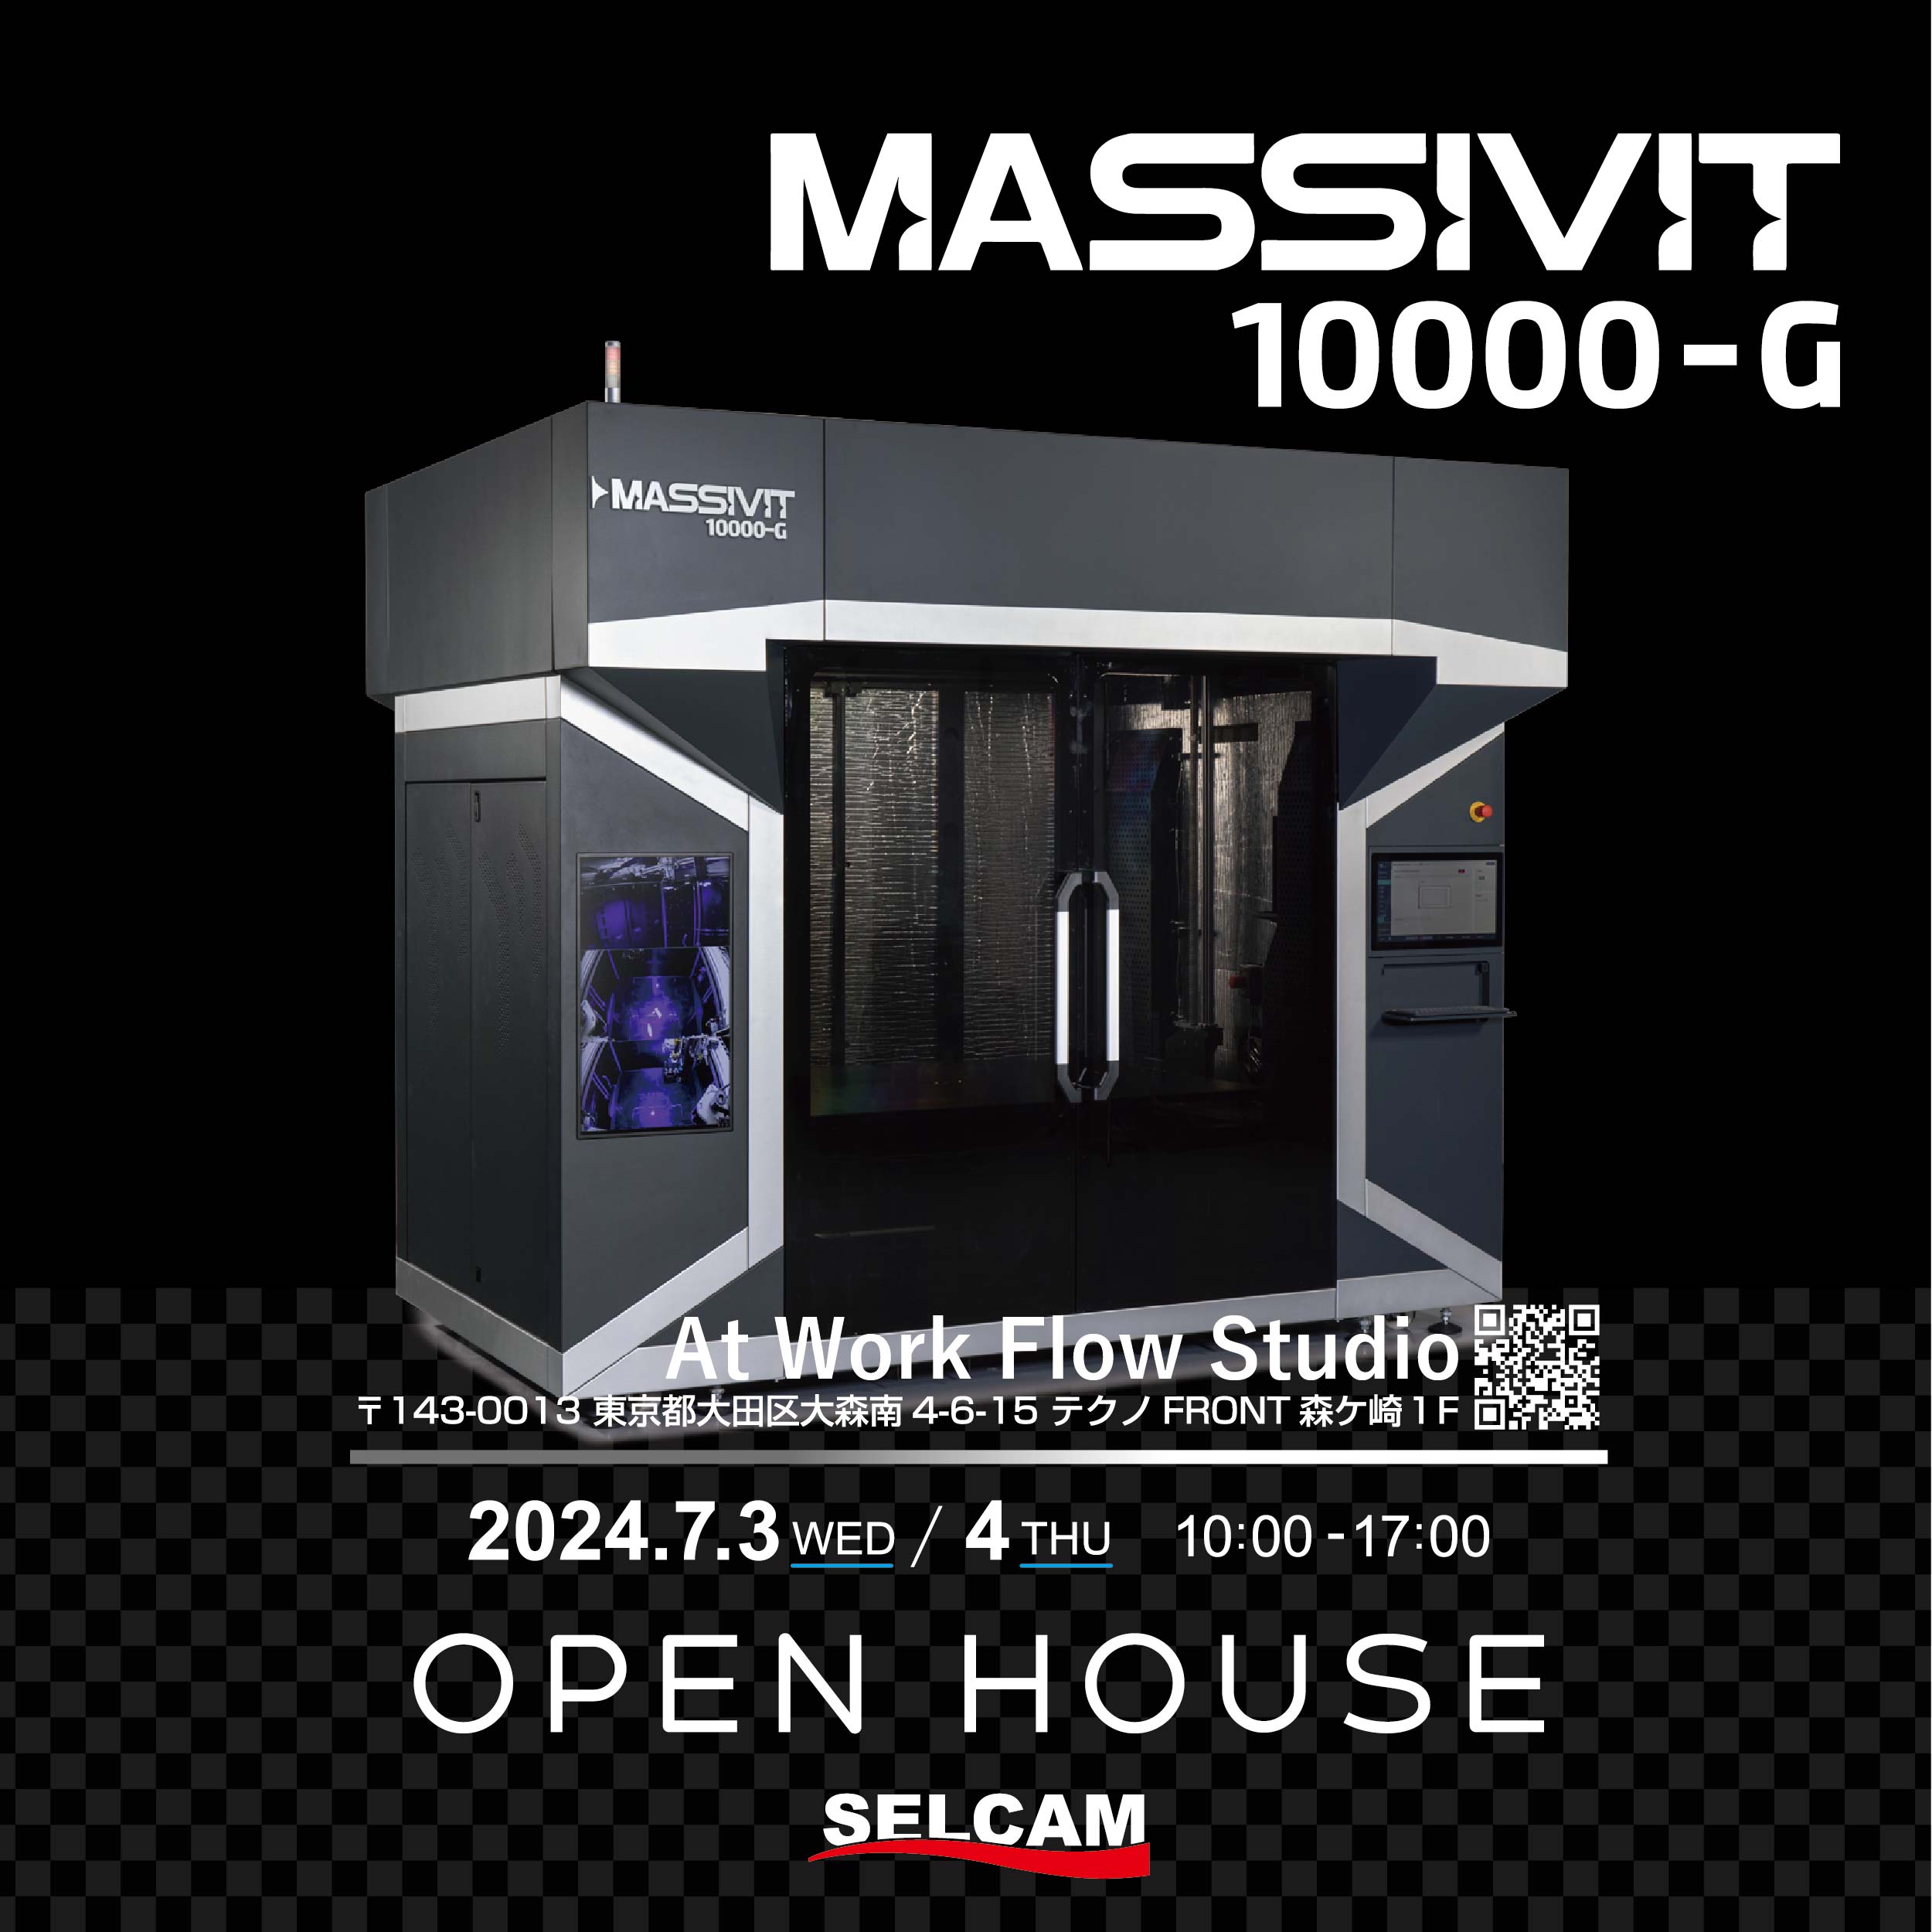 Massivit 10000-G OPEN HOUSE開催のお知らせ